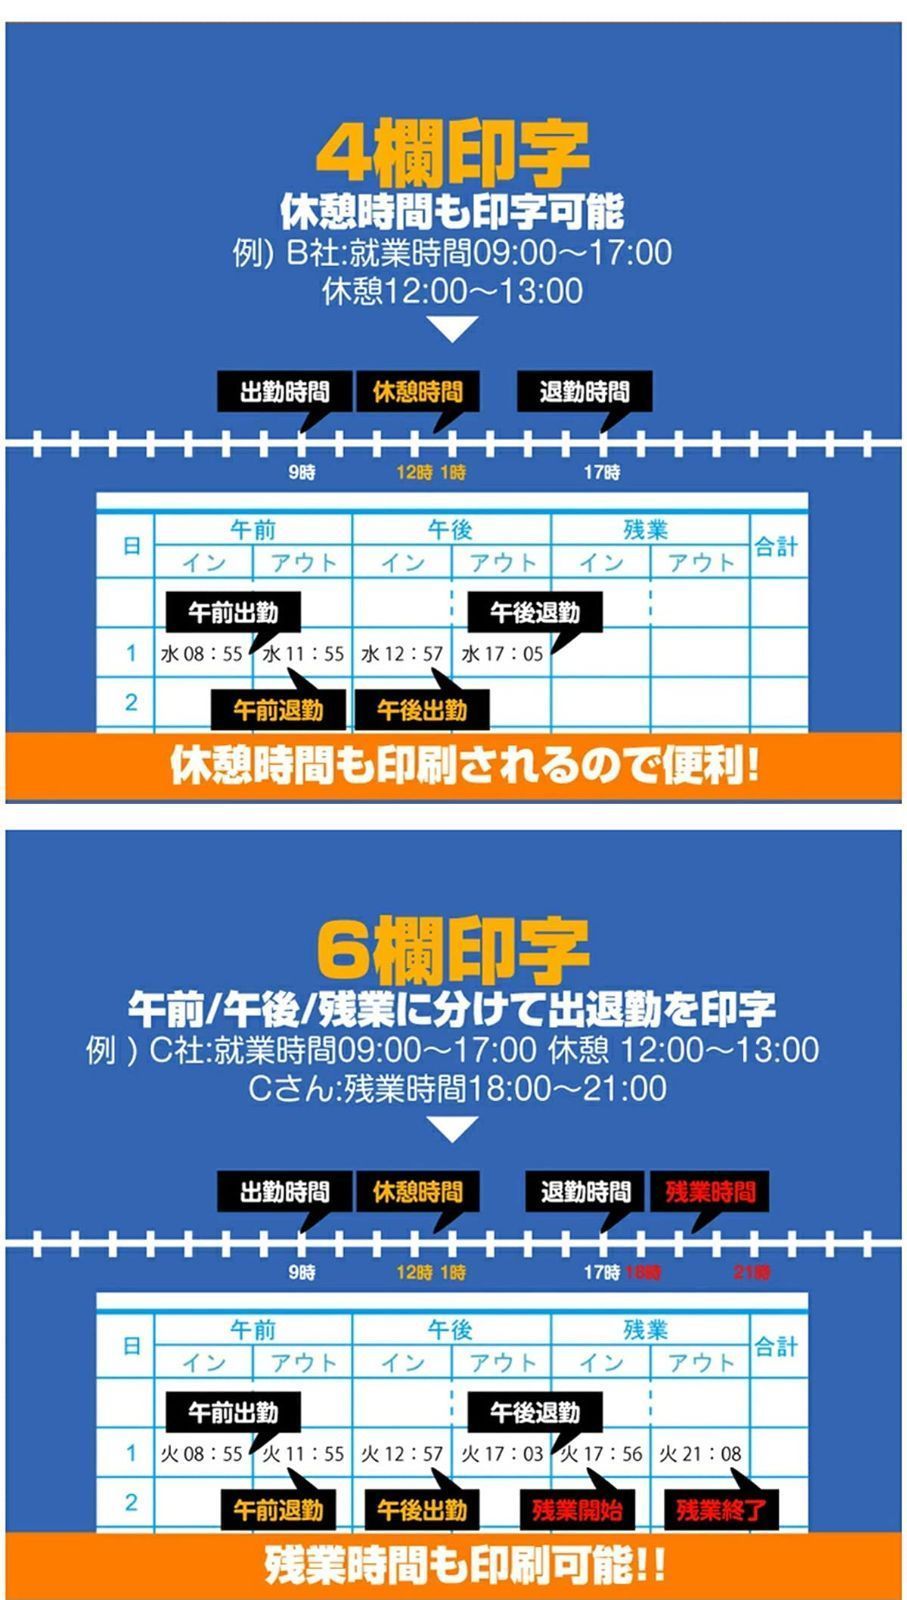 TOKAIZ タイムレコーダー 本体 6欄印字可能 両面印字モデル タイムカード５０枚付き TR-001s - 8